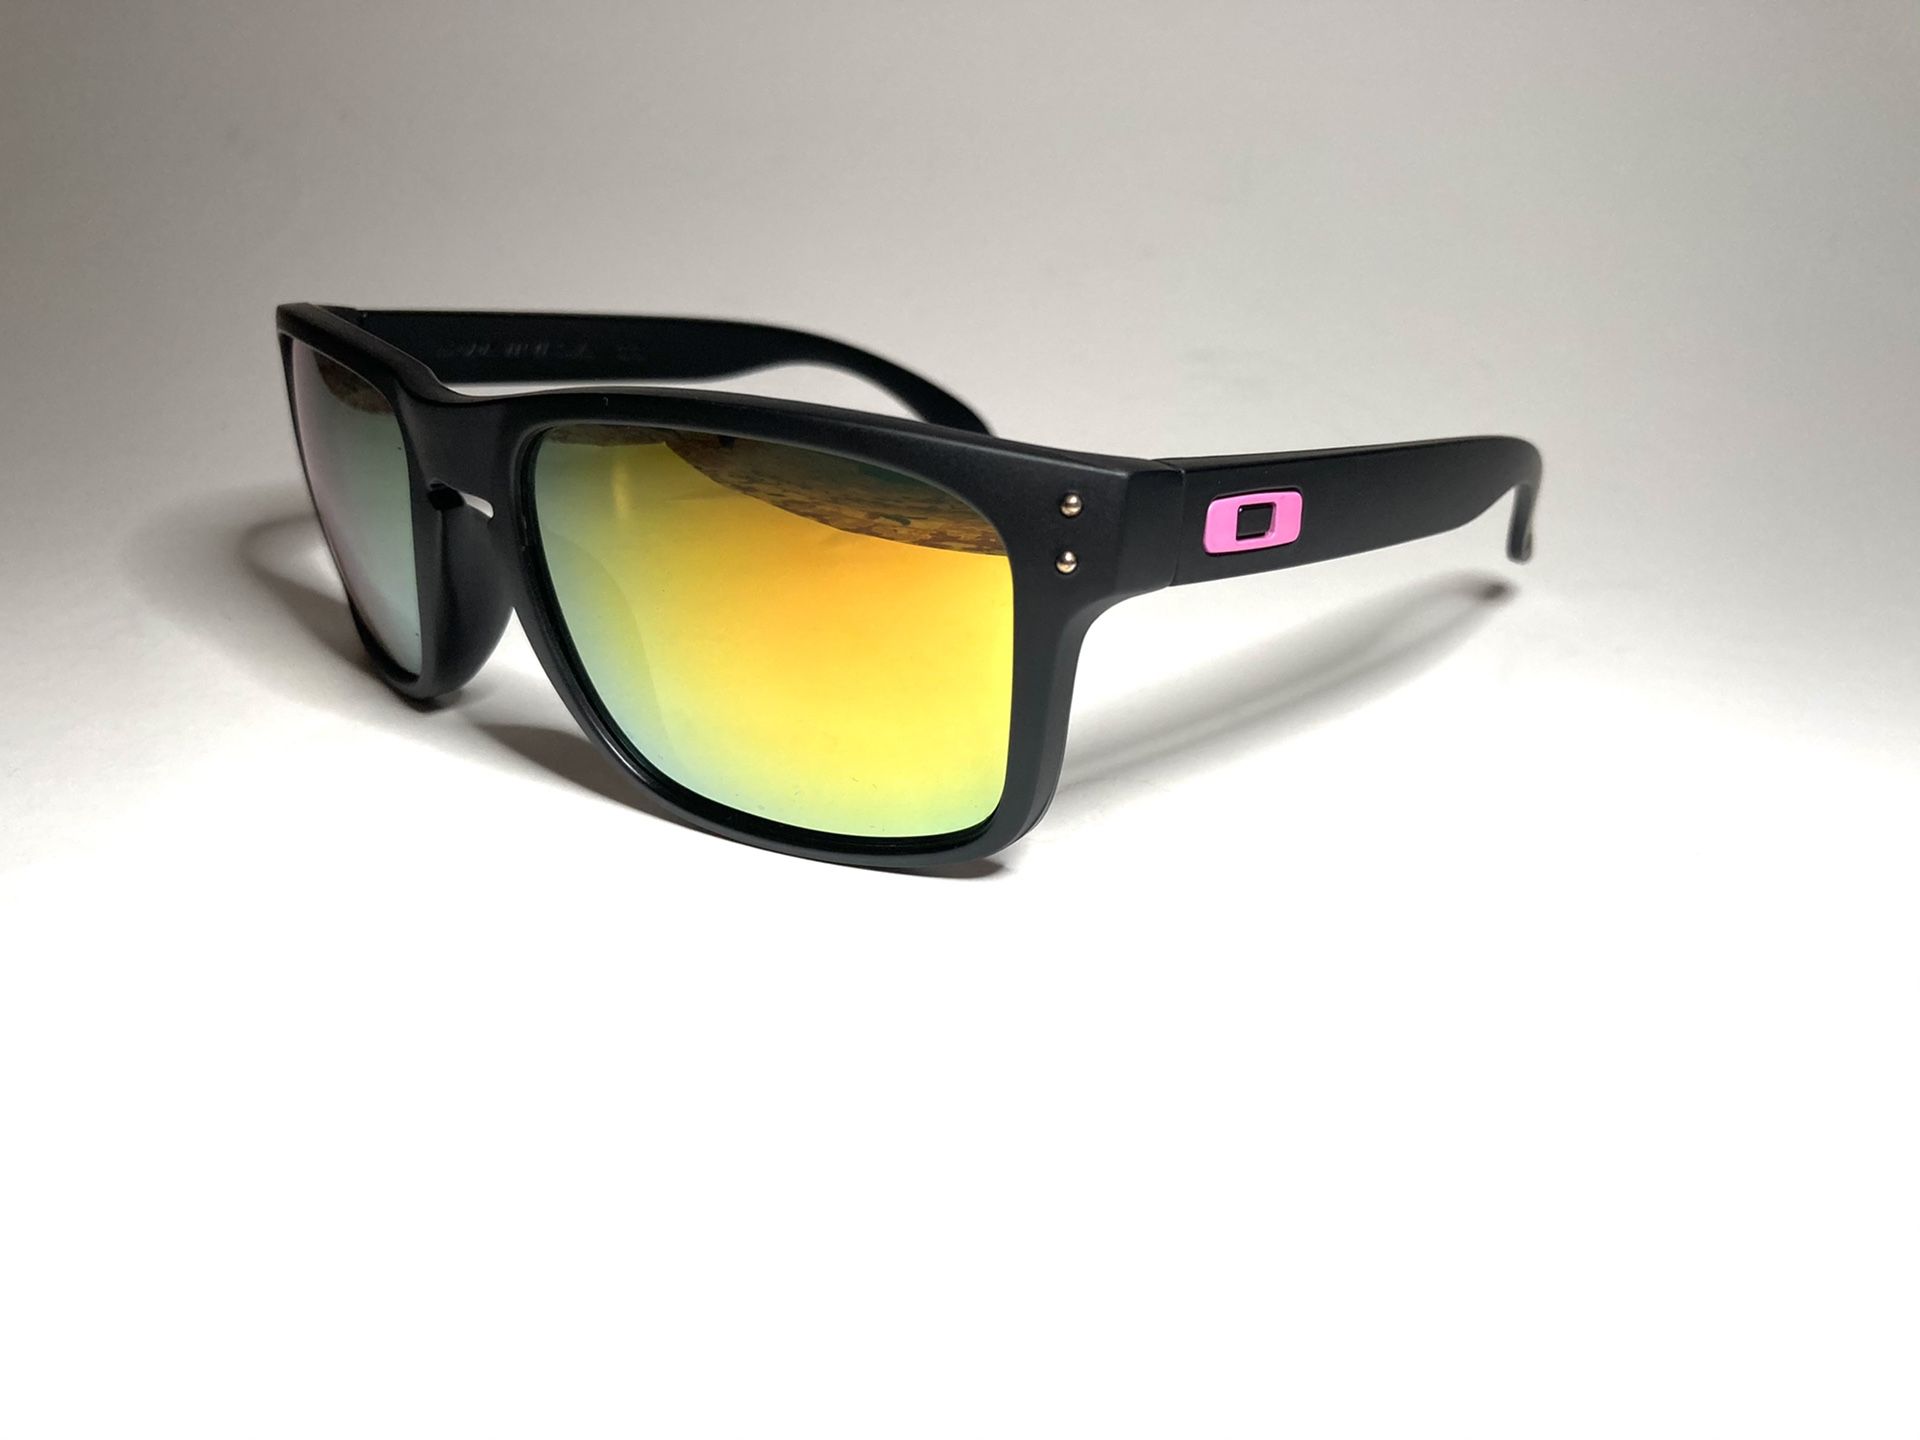 New Men’s Oakley HOLBROOK style sunglasses No scratches Pick up Costa Mesa